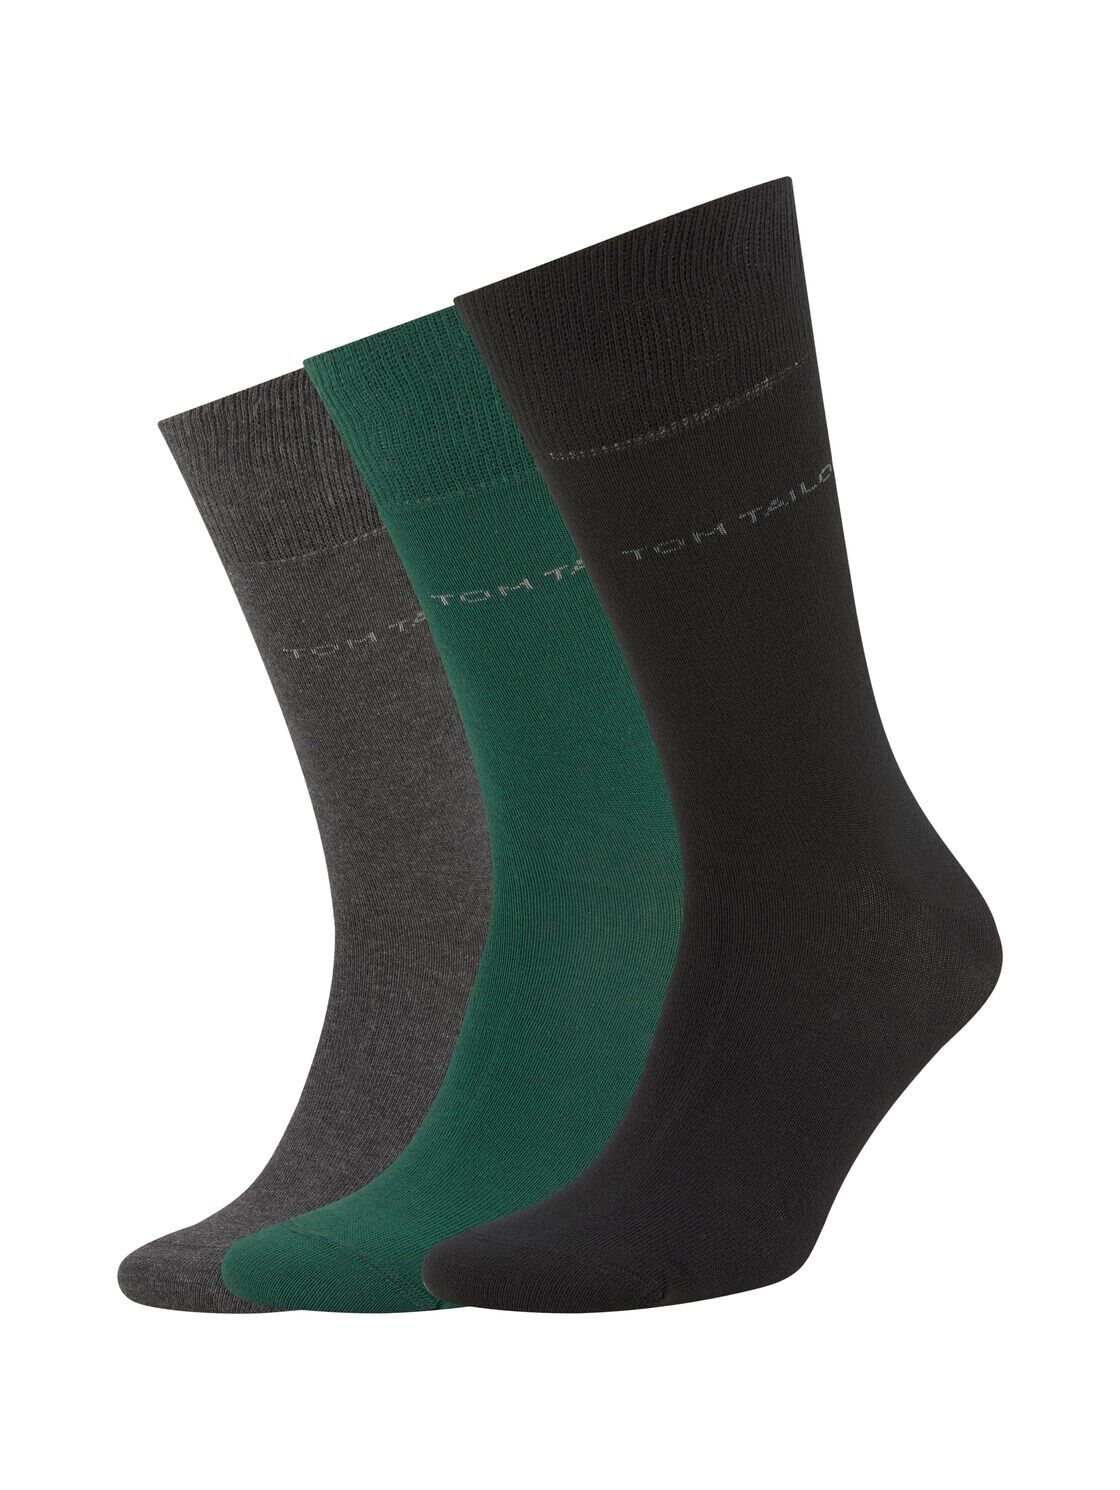 TOM TAILOR Herren Basic Socken im Dreierpack, grün, Gr.39-42